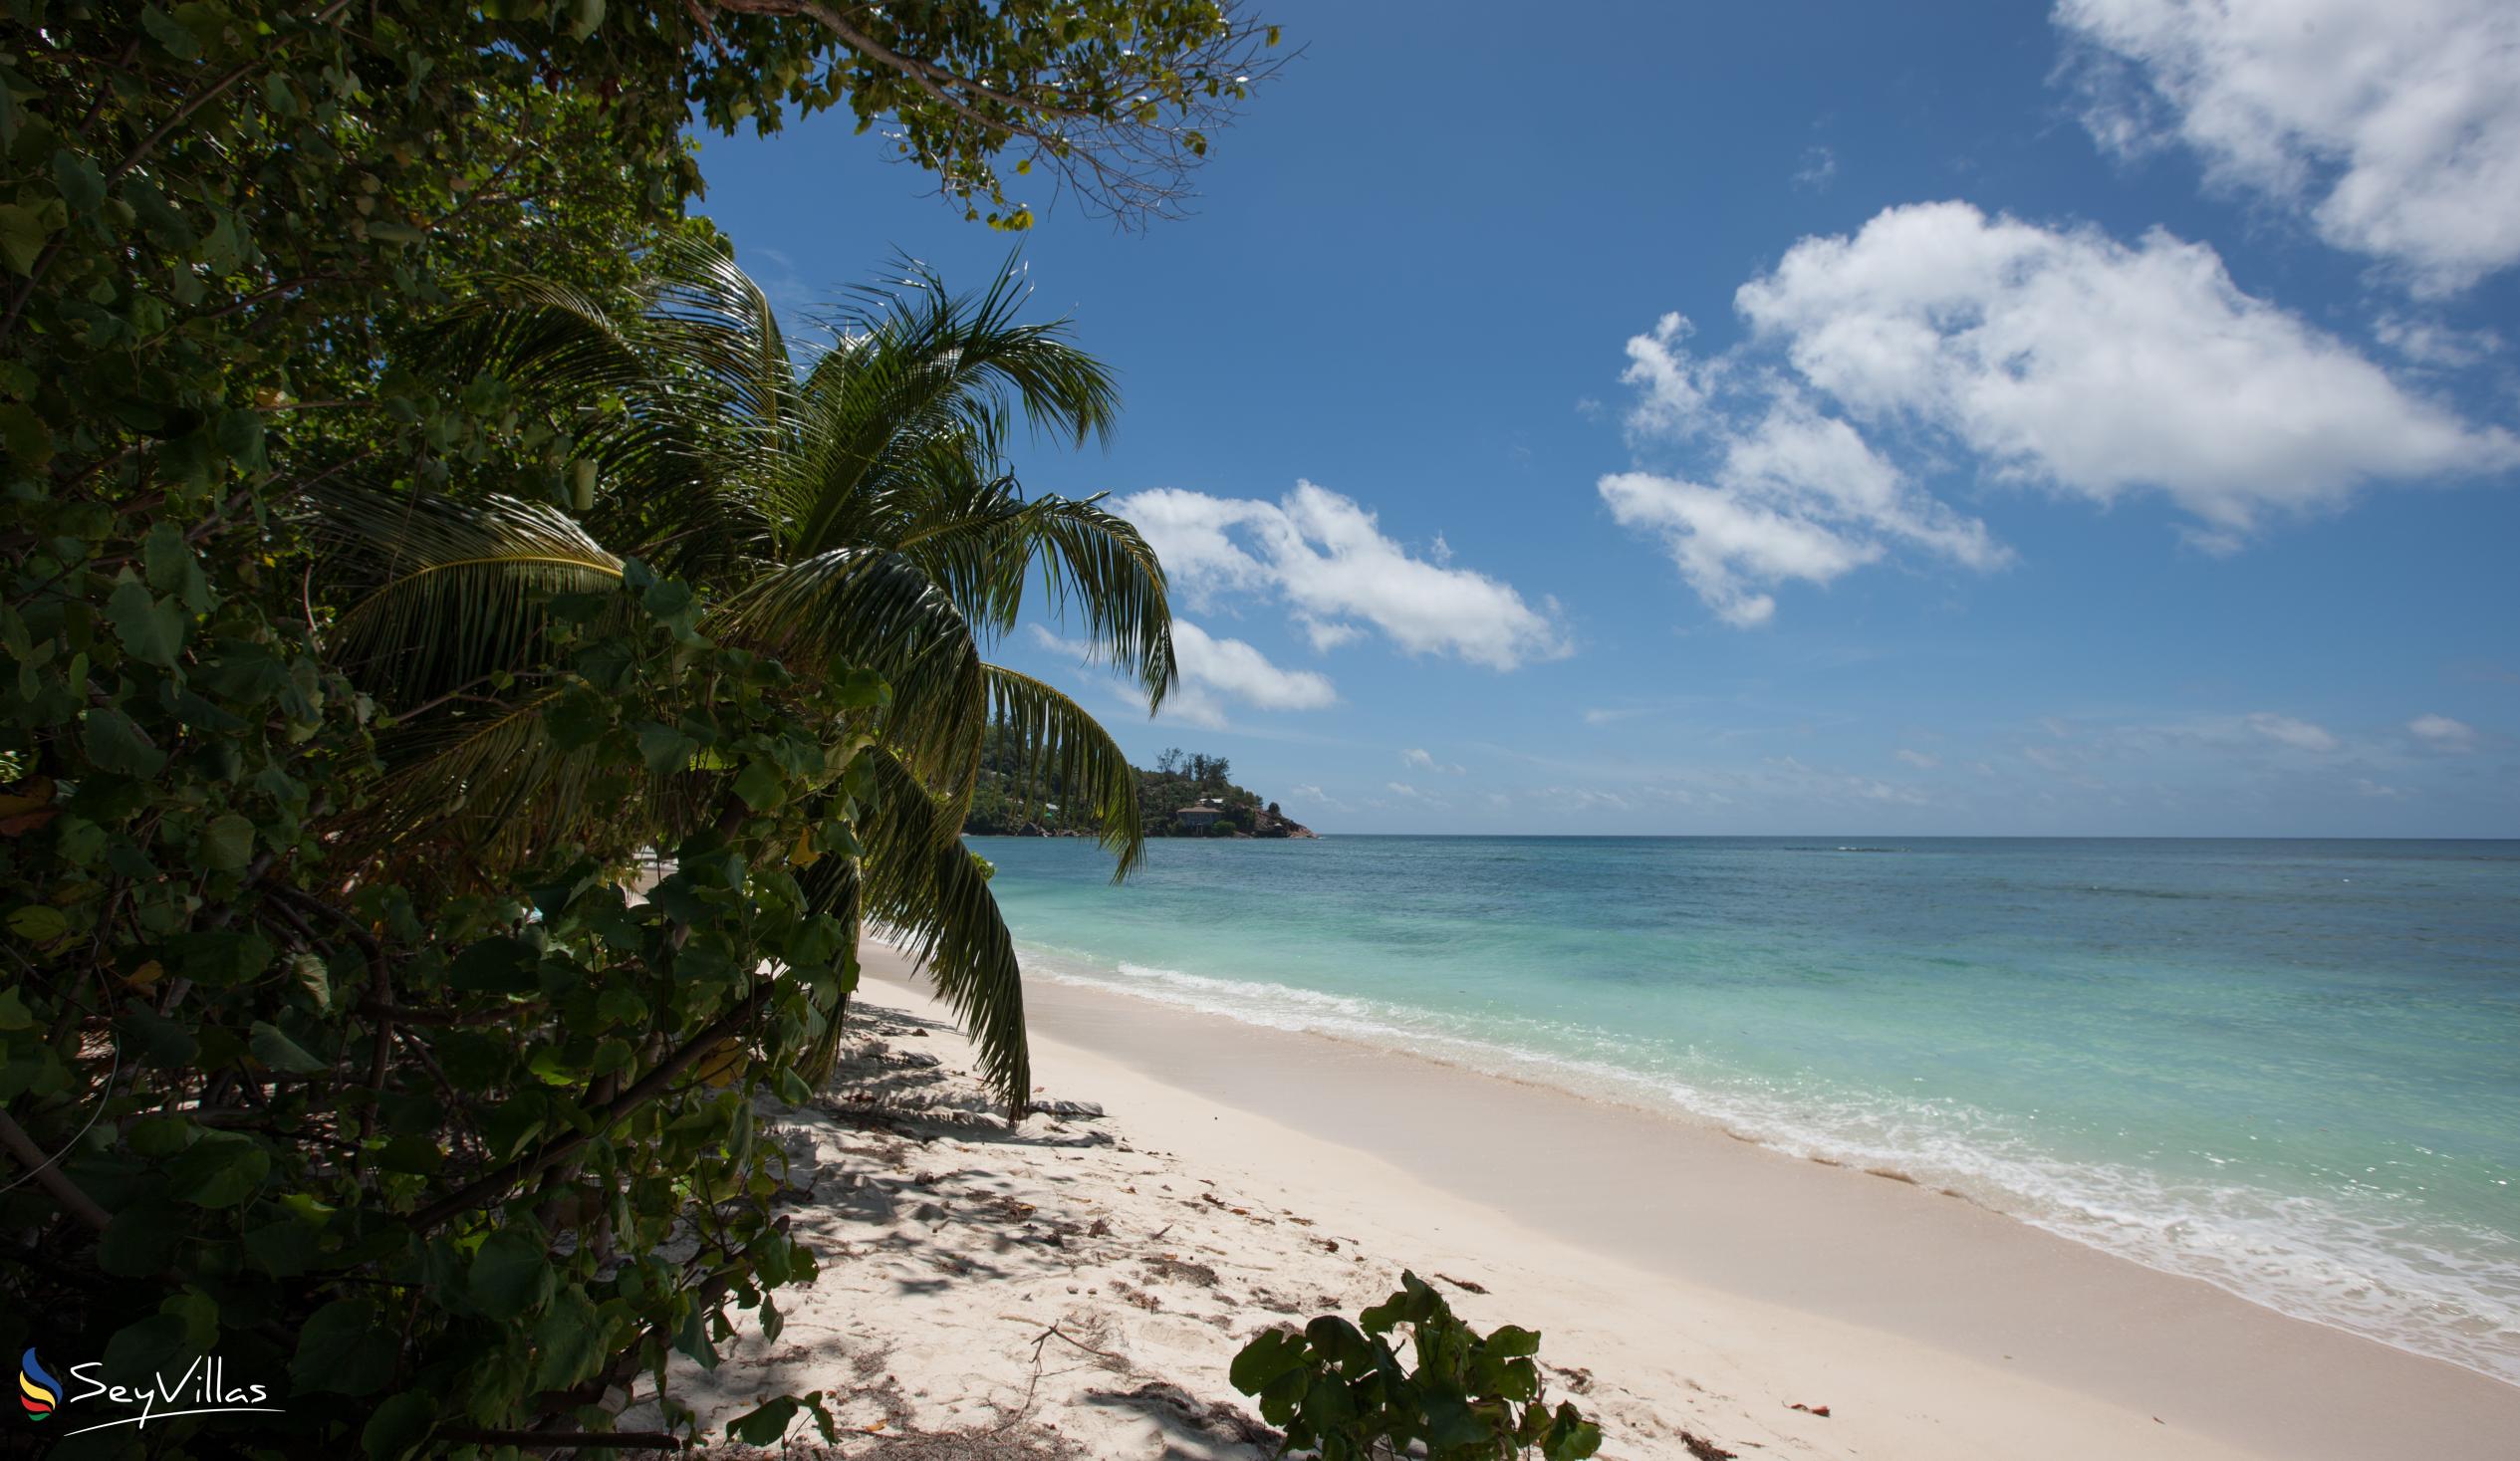 Photo 23: Tranquility Villa - Beaches - Praslin (Seychelles)